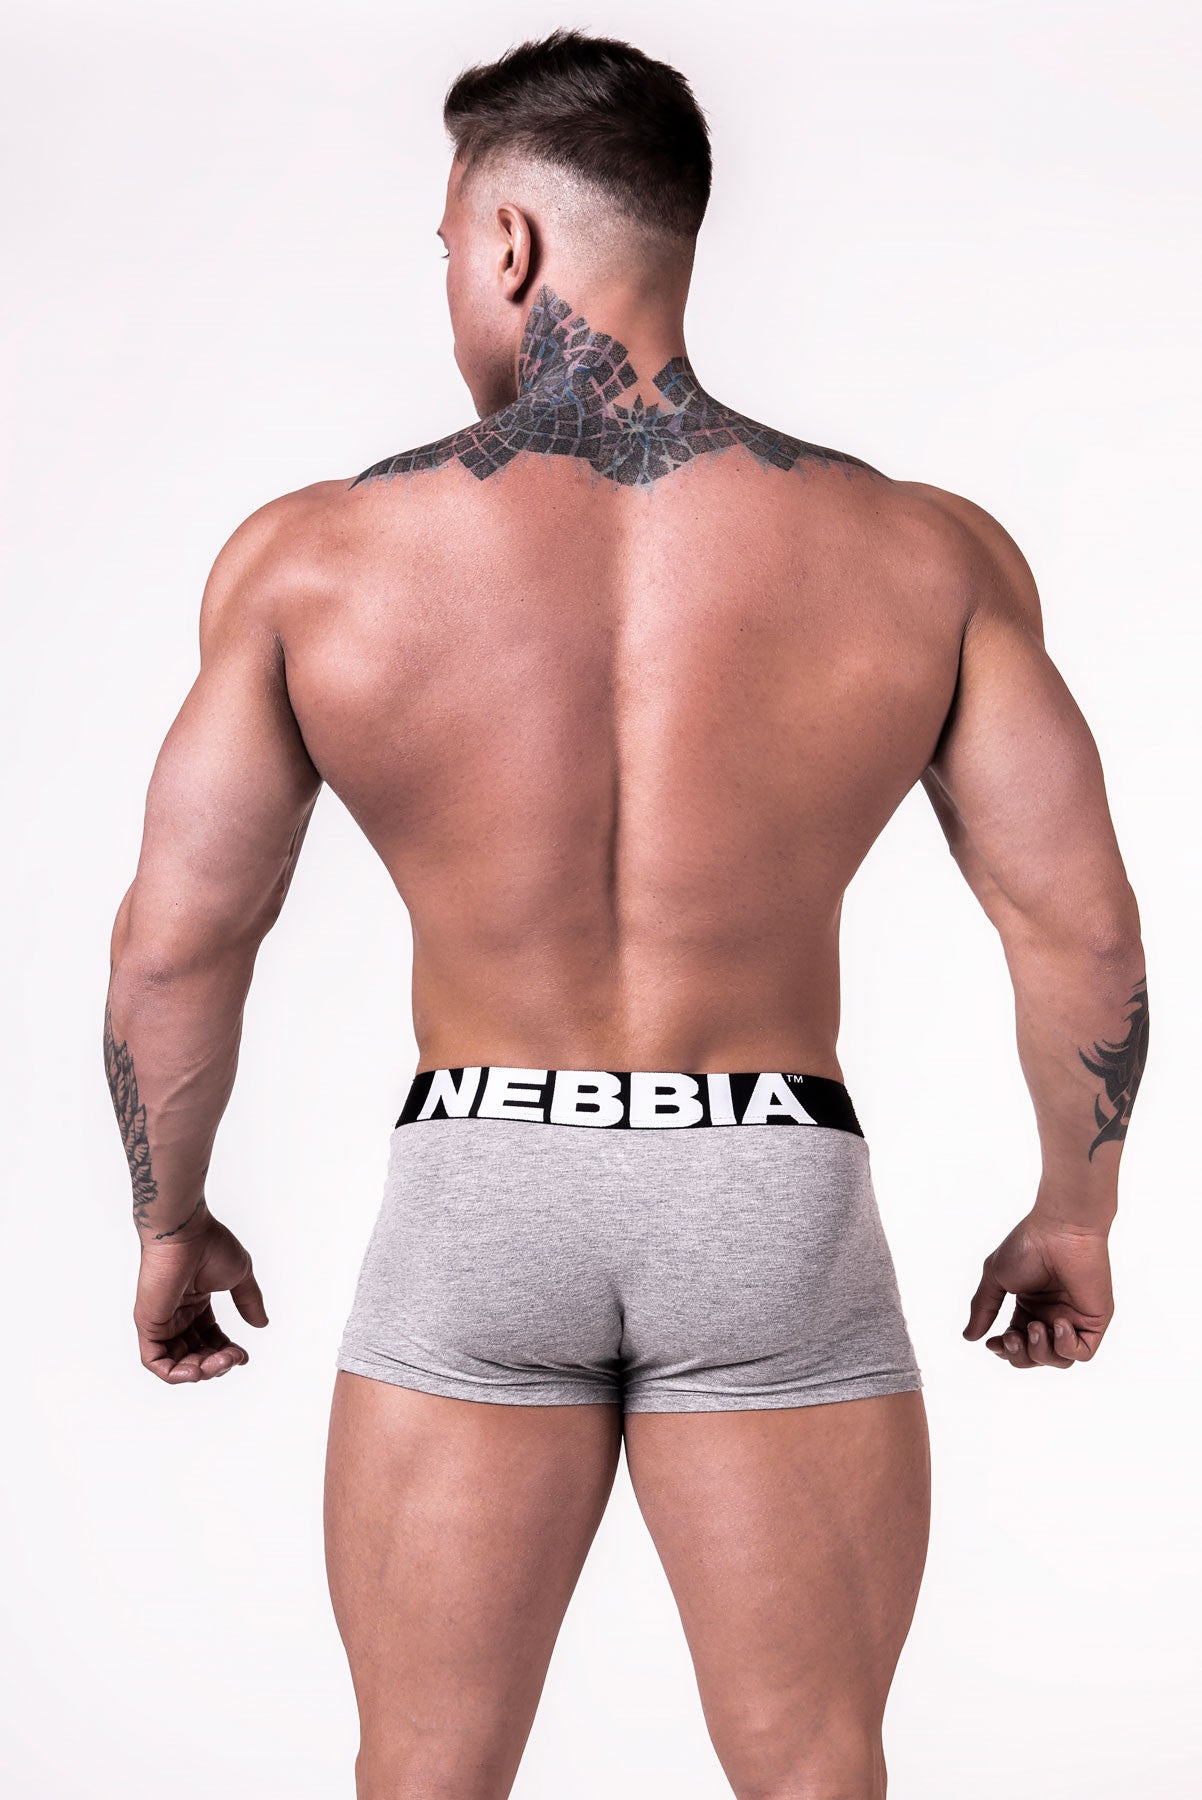 Nebbia - Men's Boxer Shorts - Light Grey (701) - Rückseite